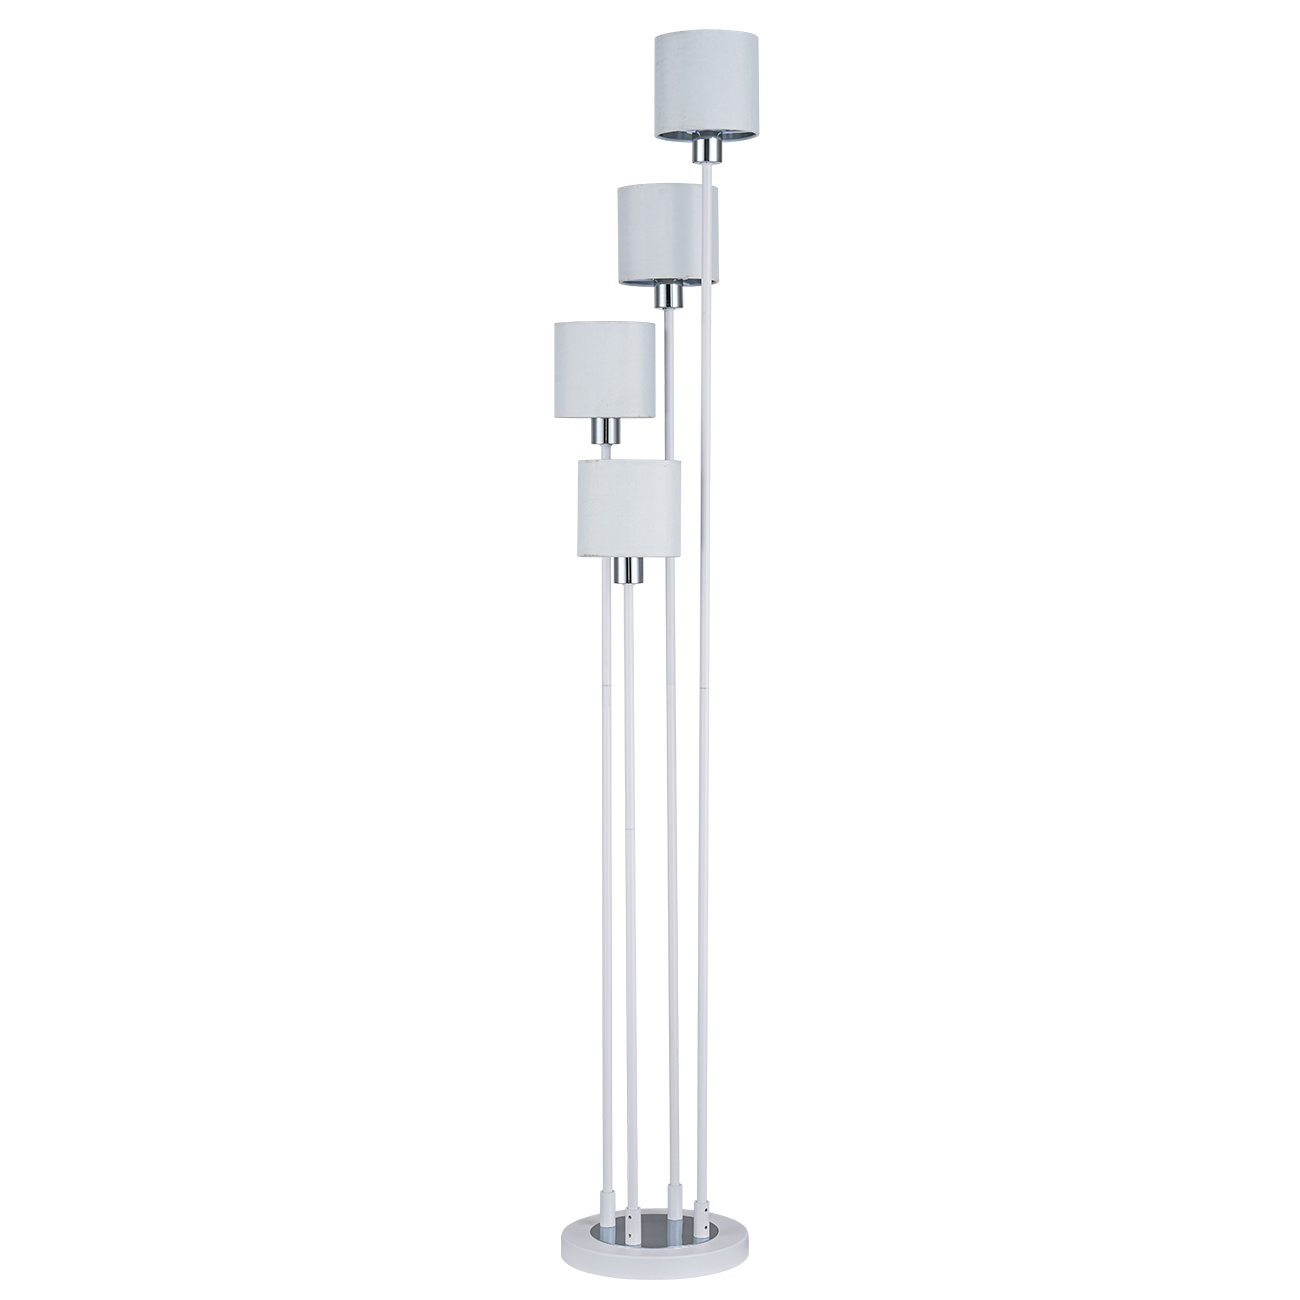 Напольный светильник Escada 1109/4 E14*40W White/Silver